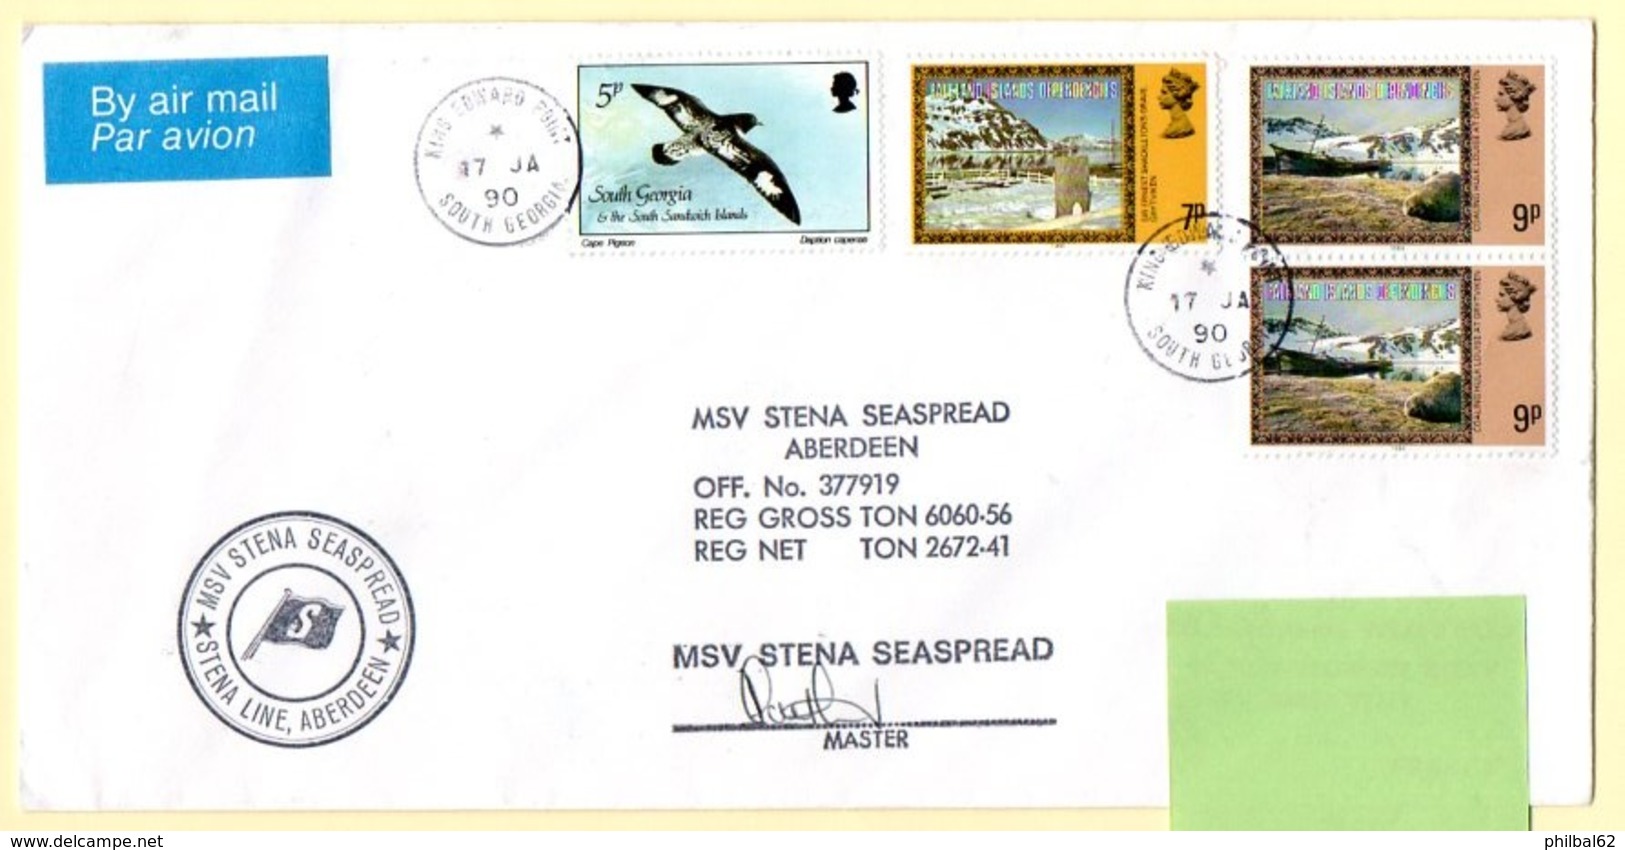 Polaire Falklands & South Georgia. Cachet MSV Stena Seaspread + Signature. Cachet à Date King Edouard South Georgia. - Programmes Scientifiques